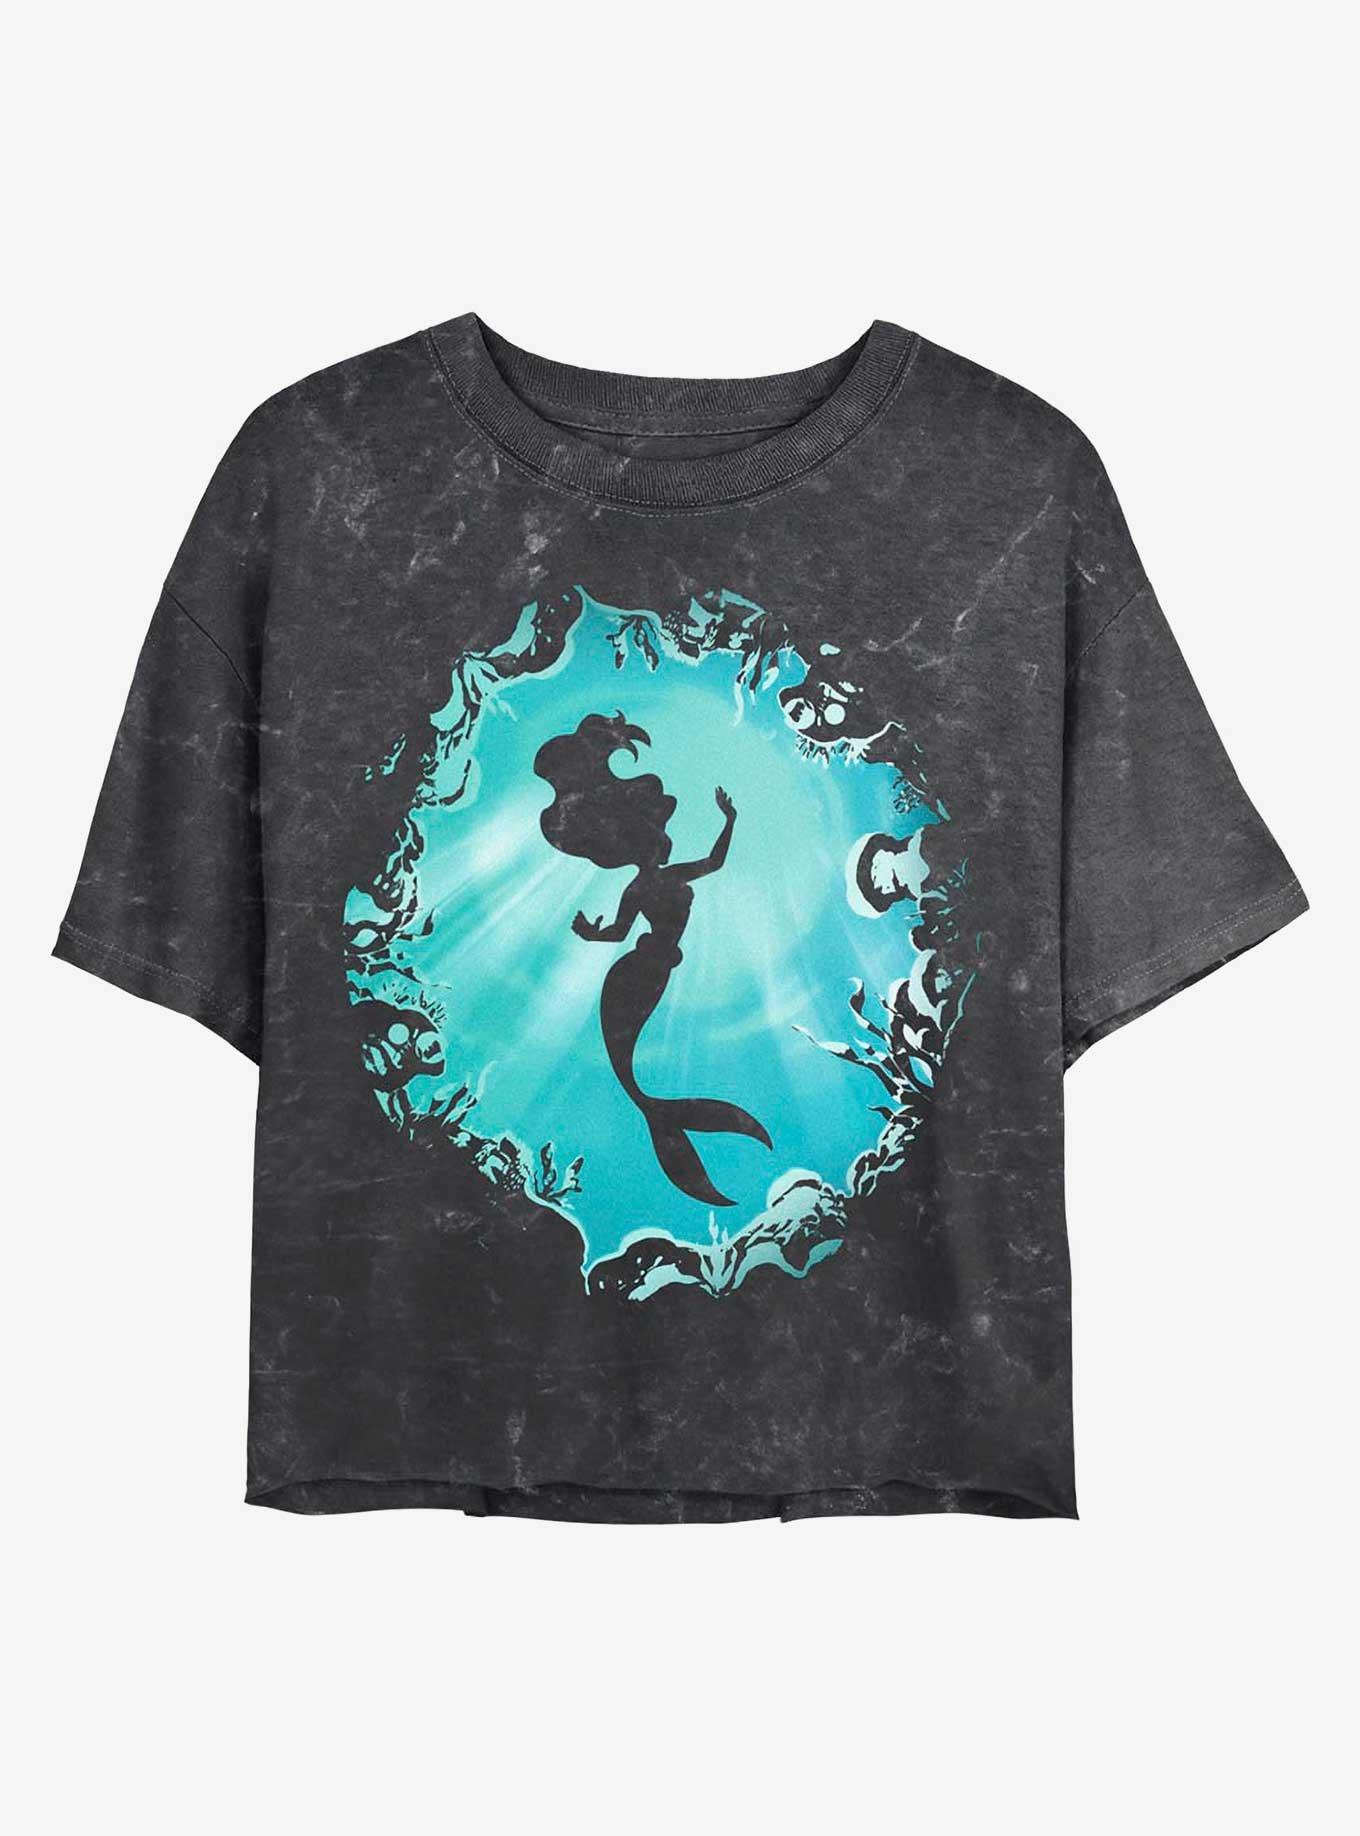 Disney Princesses Ariel's Grotto Mineral Wash Crop Girls T-Shirt